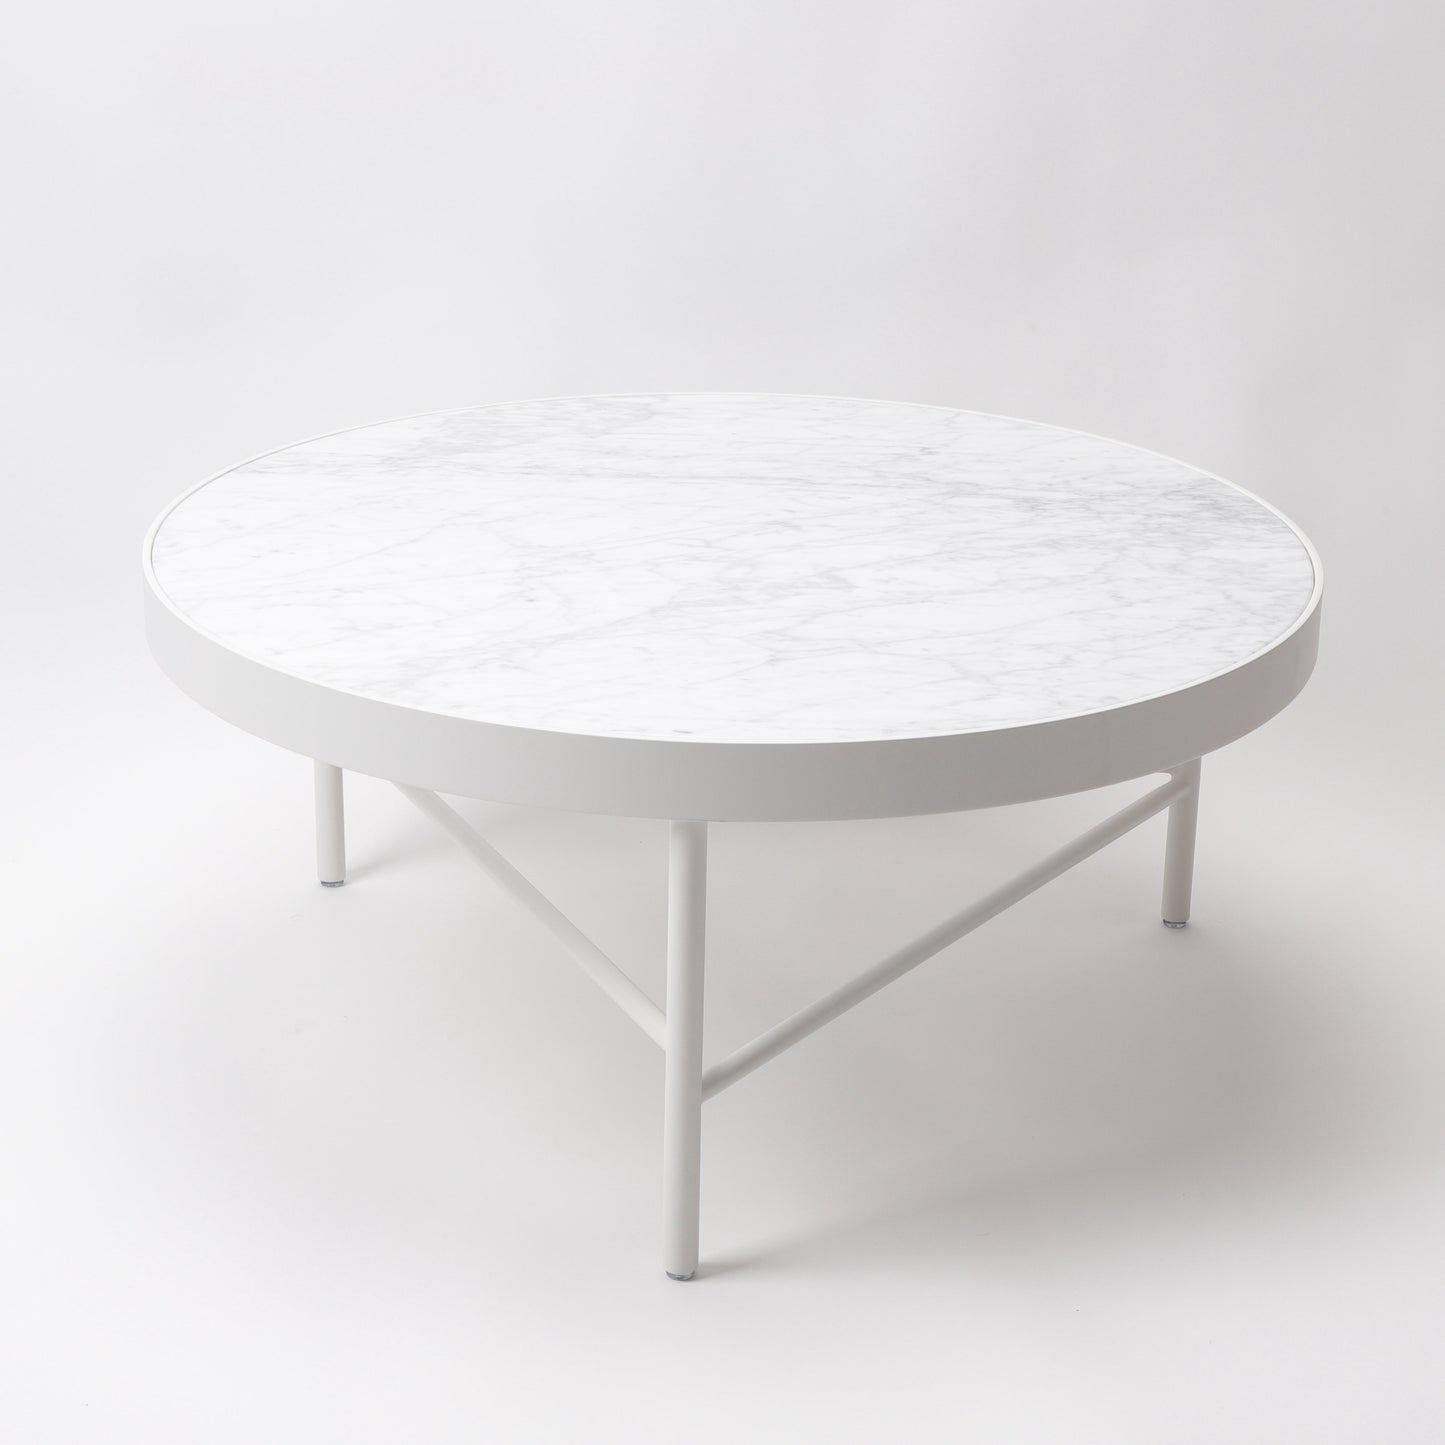 Blake Coffee Table - Carrara White Marble Top